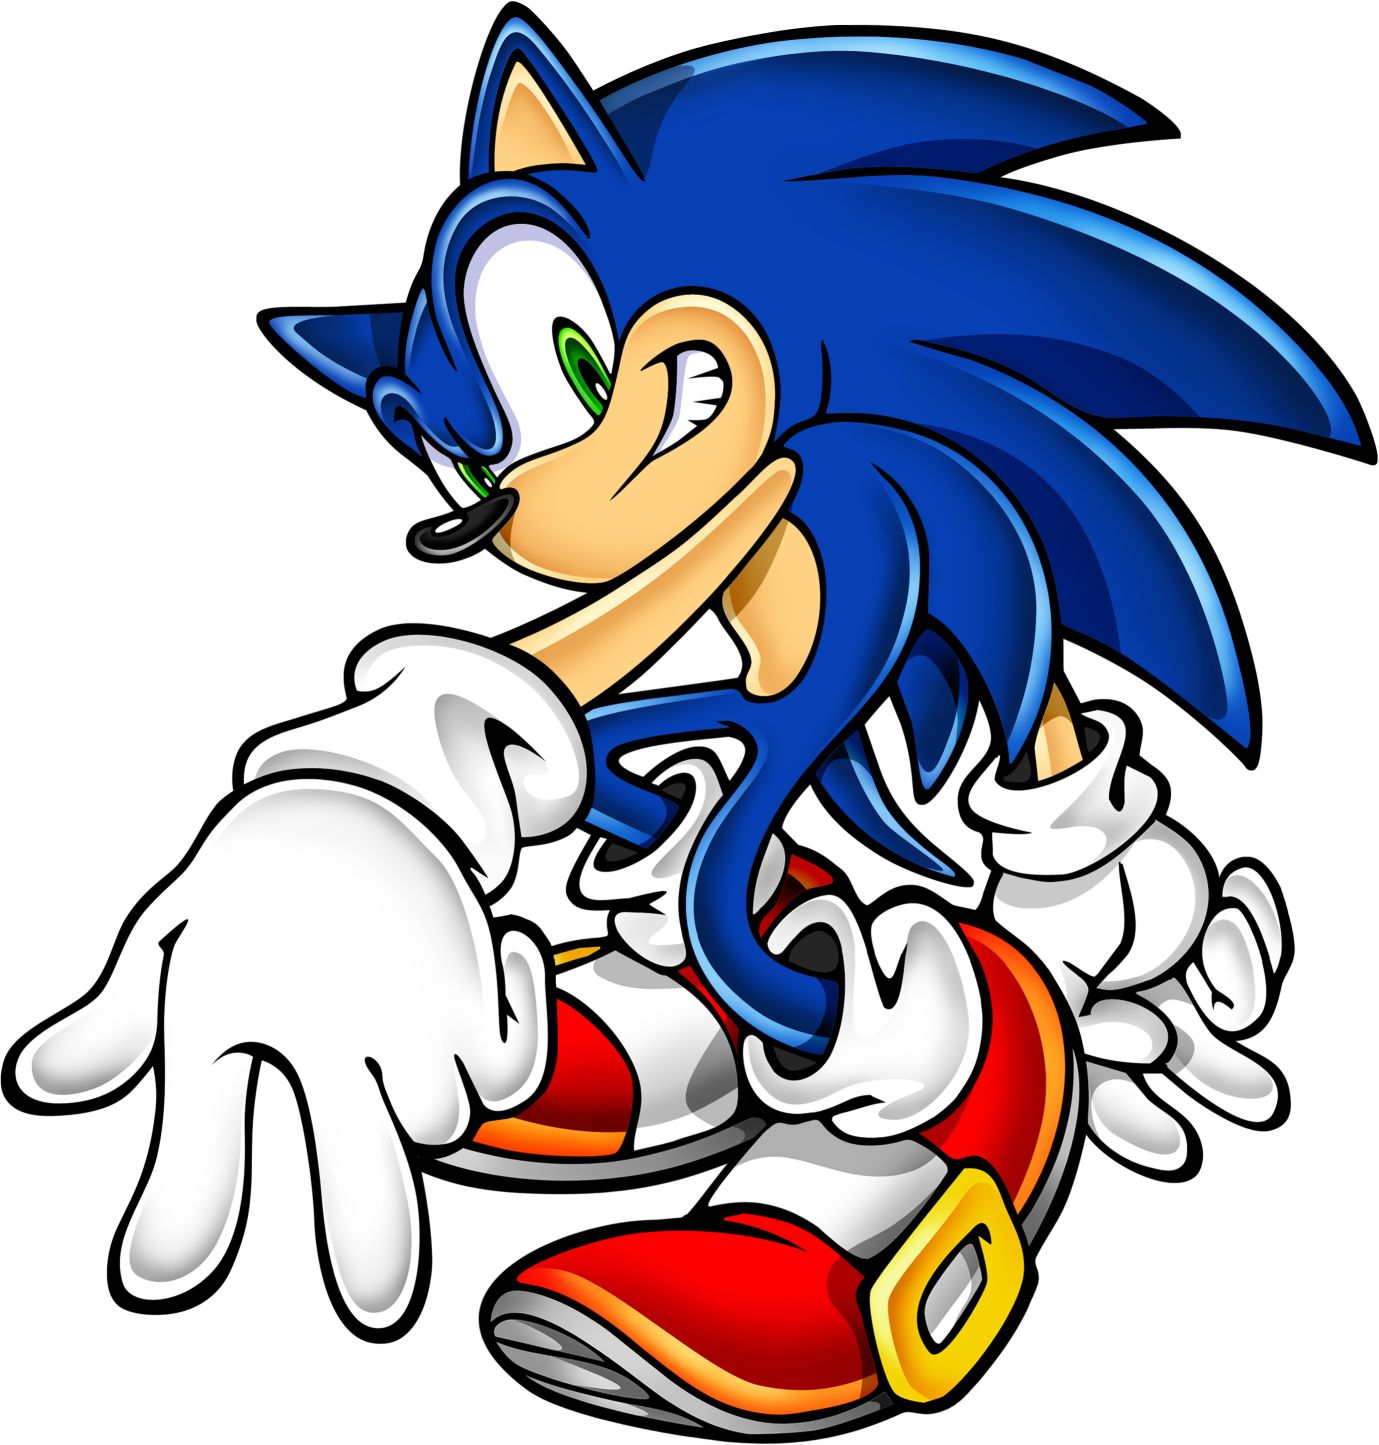 Sonic-the-Hedgehog-character-001.jpg